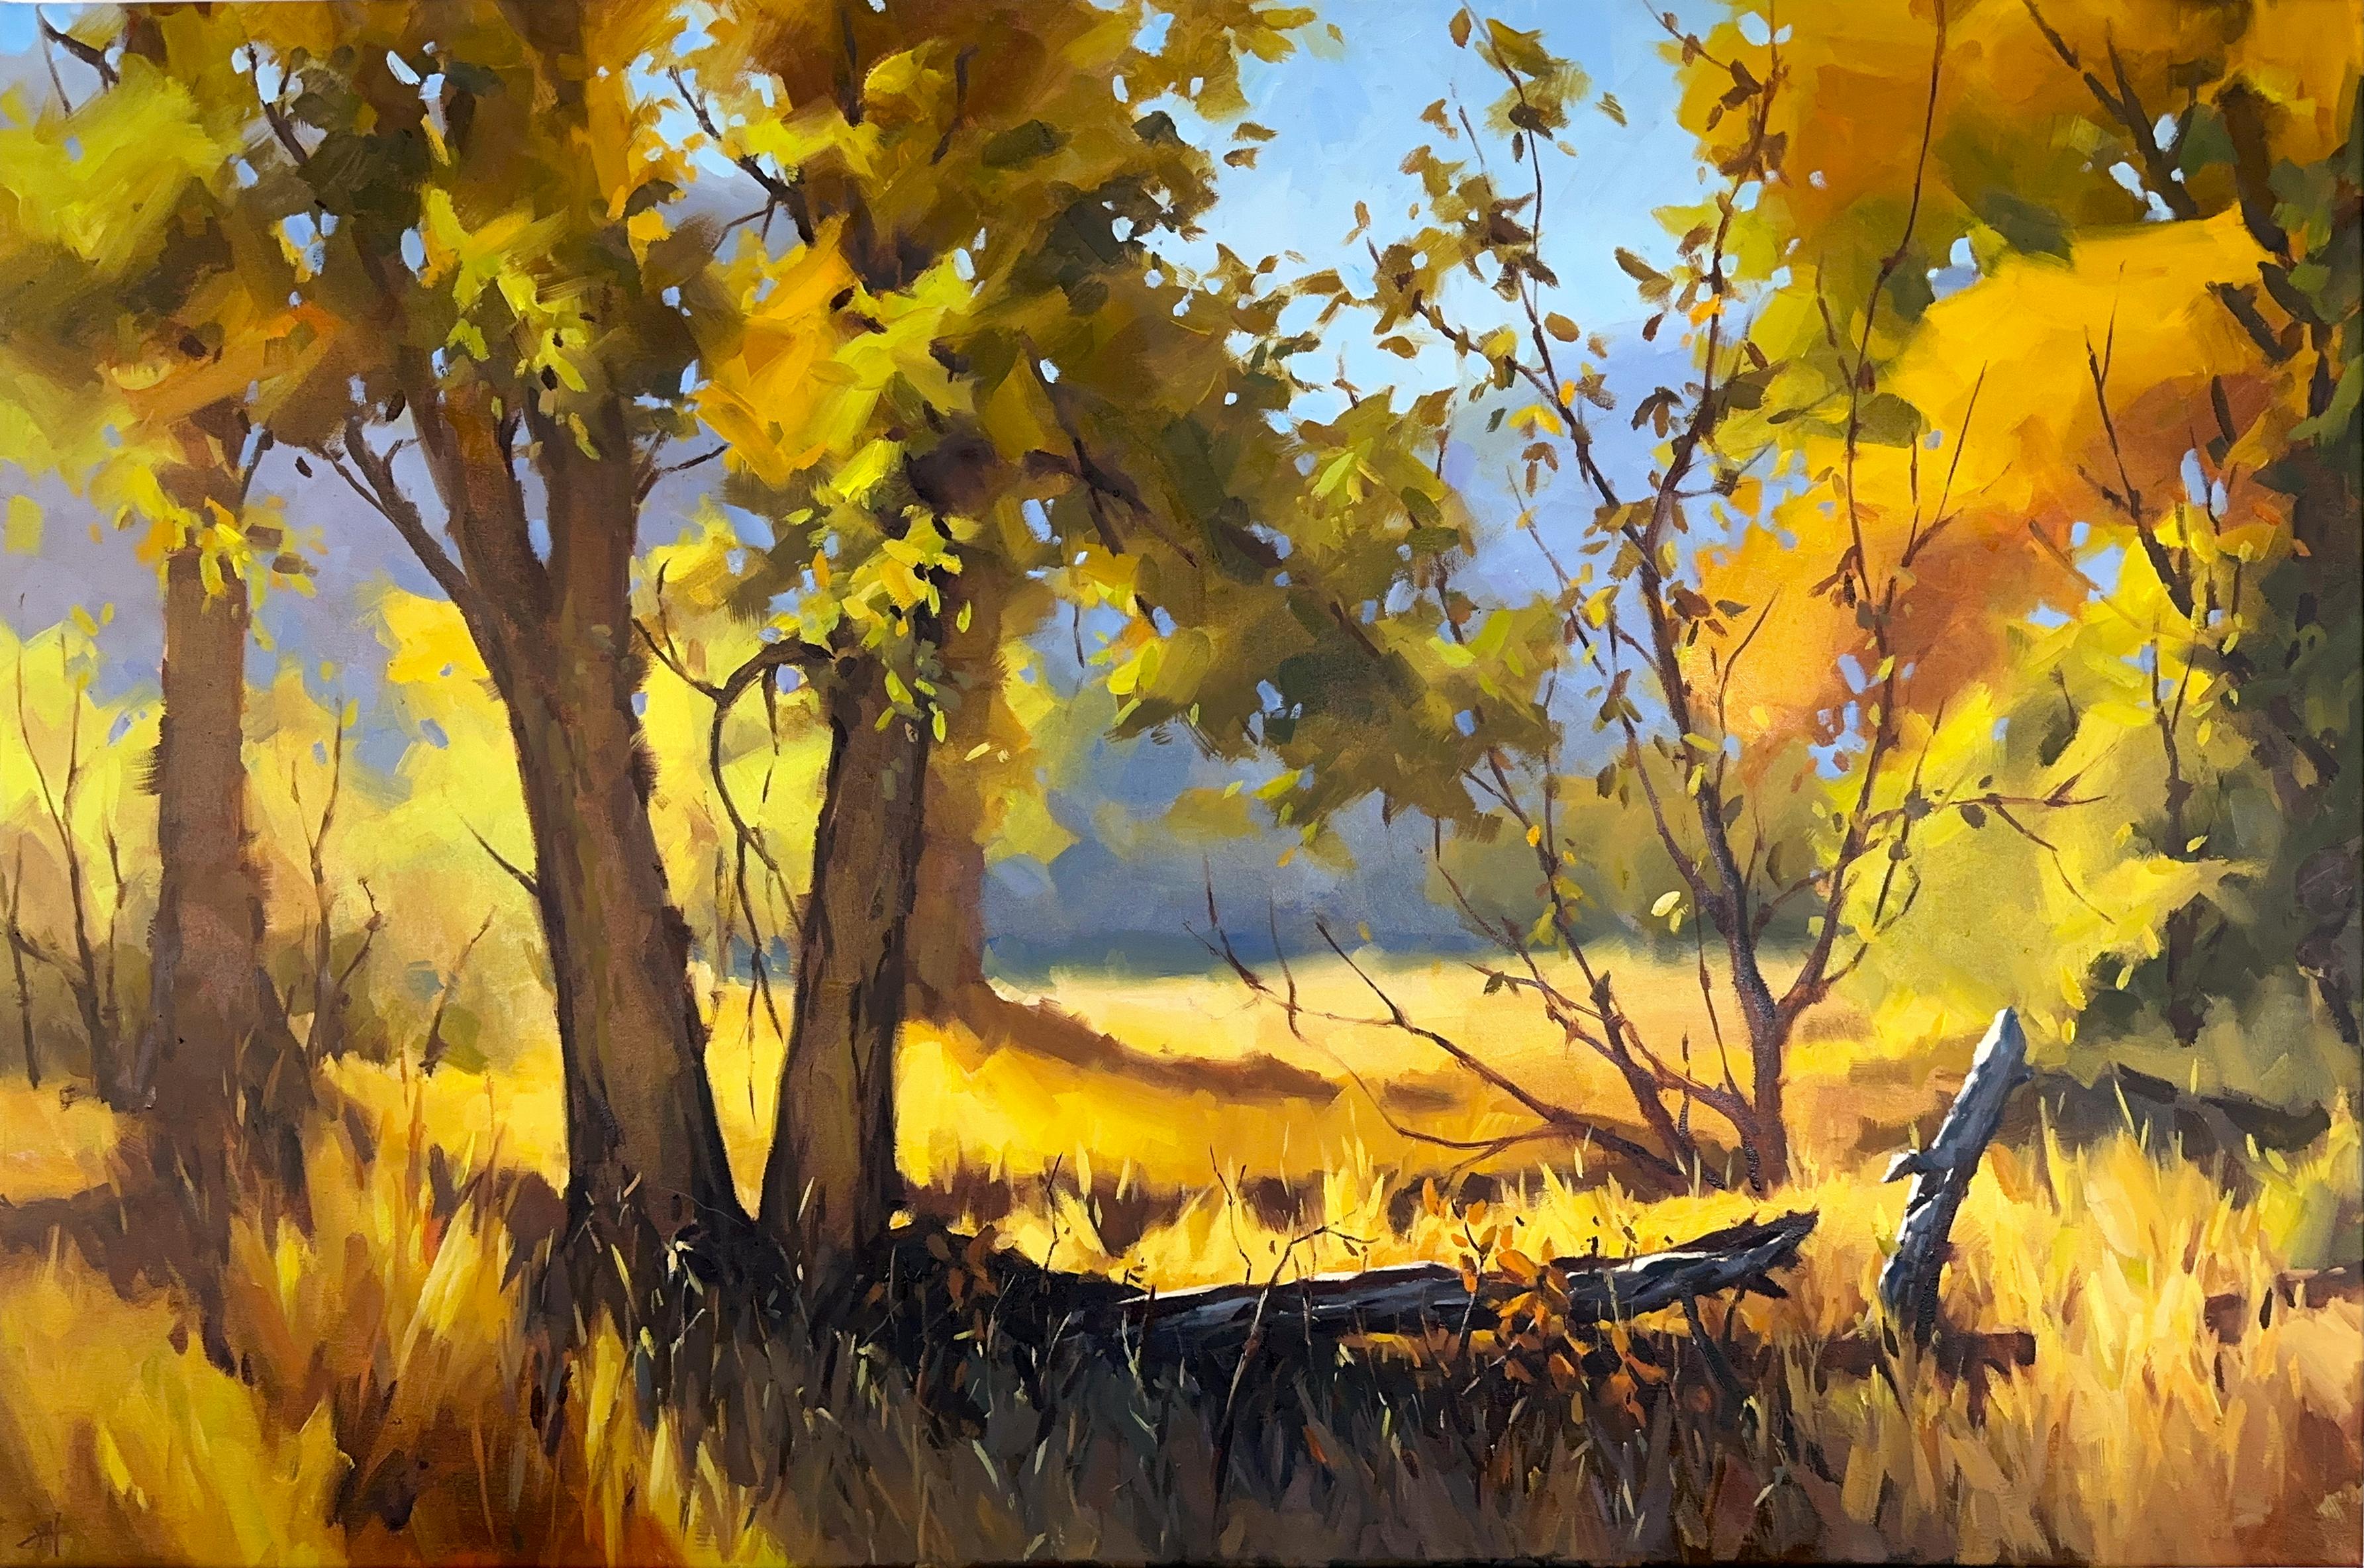 Judd Mercer Figurative Painting - "Autumn Grove" Oil Painting